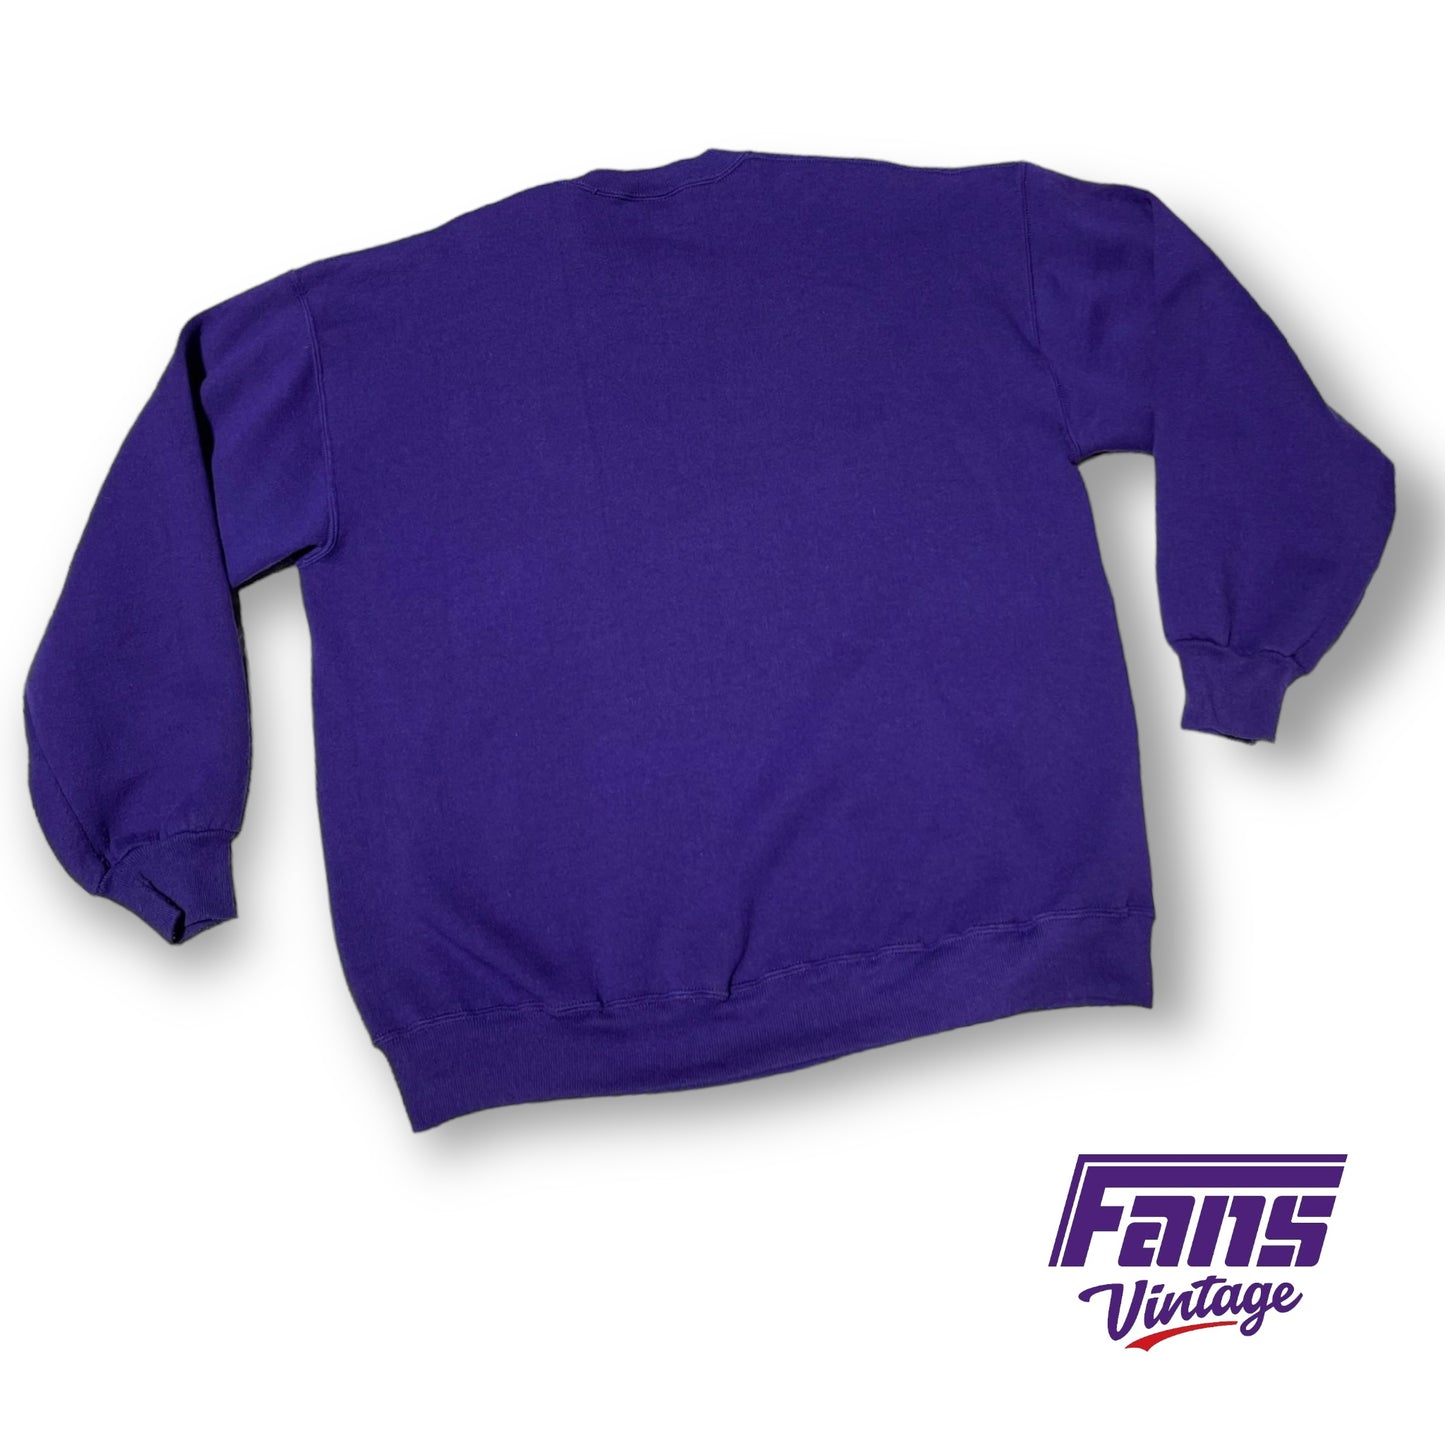 *GRAIL* Vintage TCU Crewneck Sweatshirt with GIANT 90s Graphics feat. funny crop top SuperFrog logo!